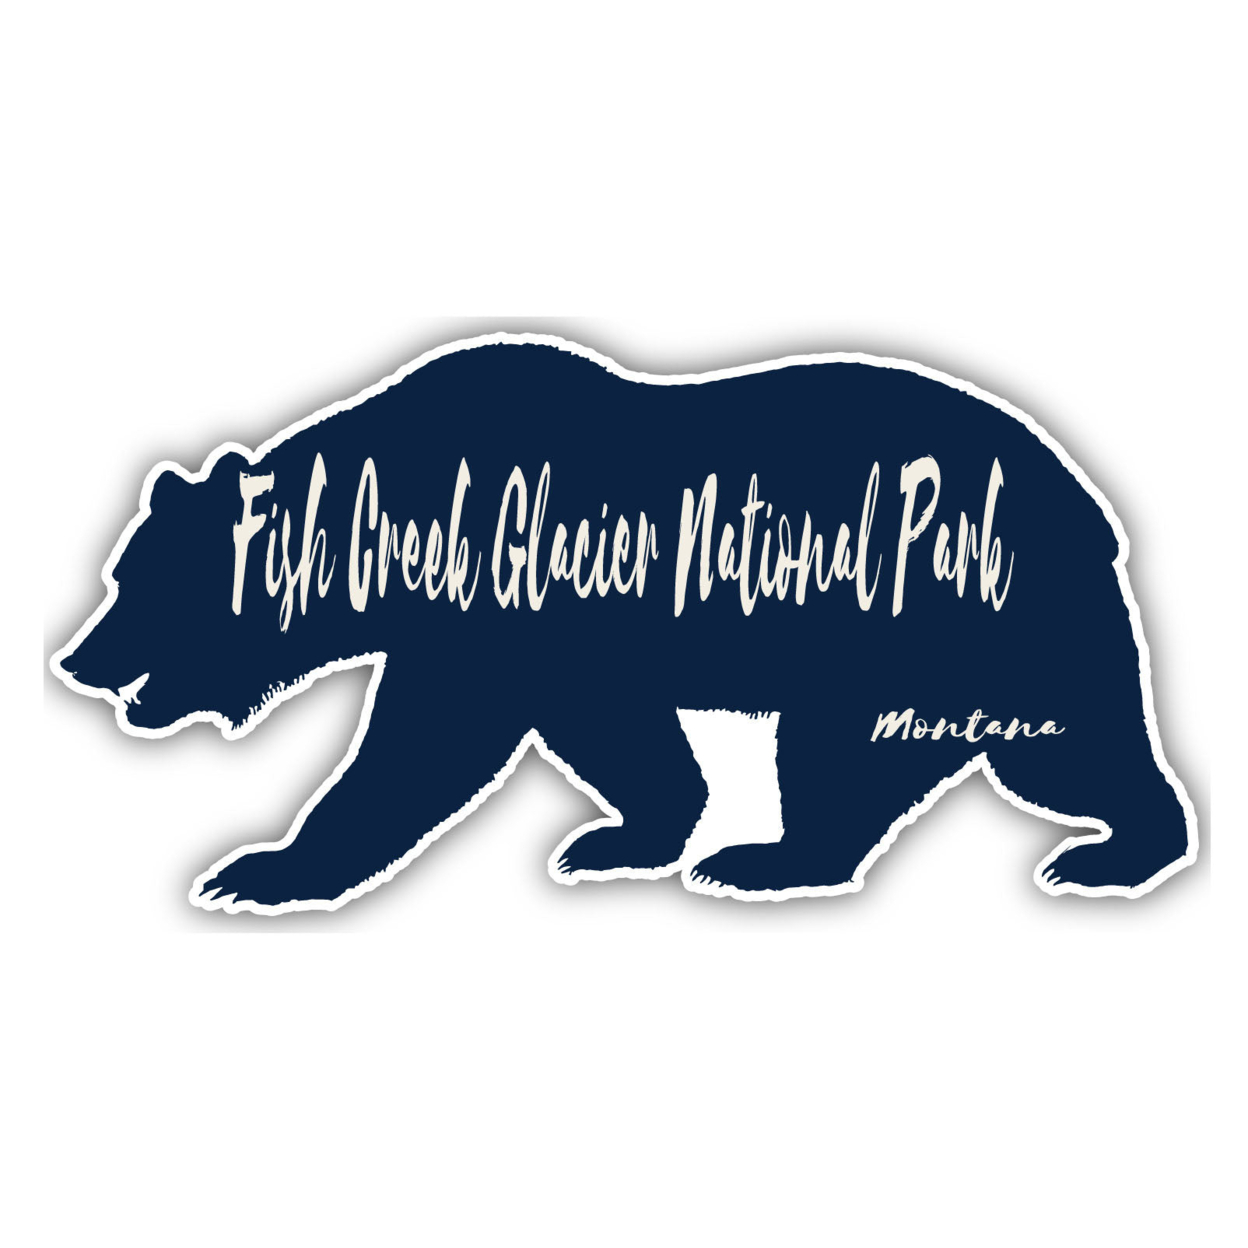 Fish Creek Glacier National Park Montana Souvenir Decorative Stickers (Choose Theme And Size) - 4-Pack, 4-Inch, Bear